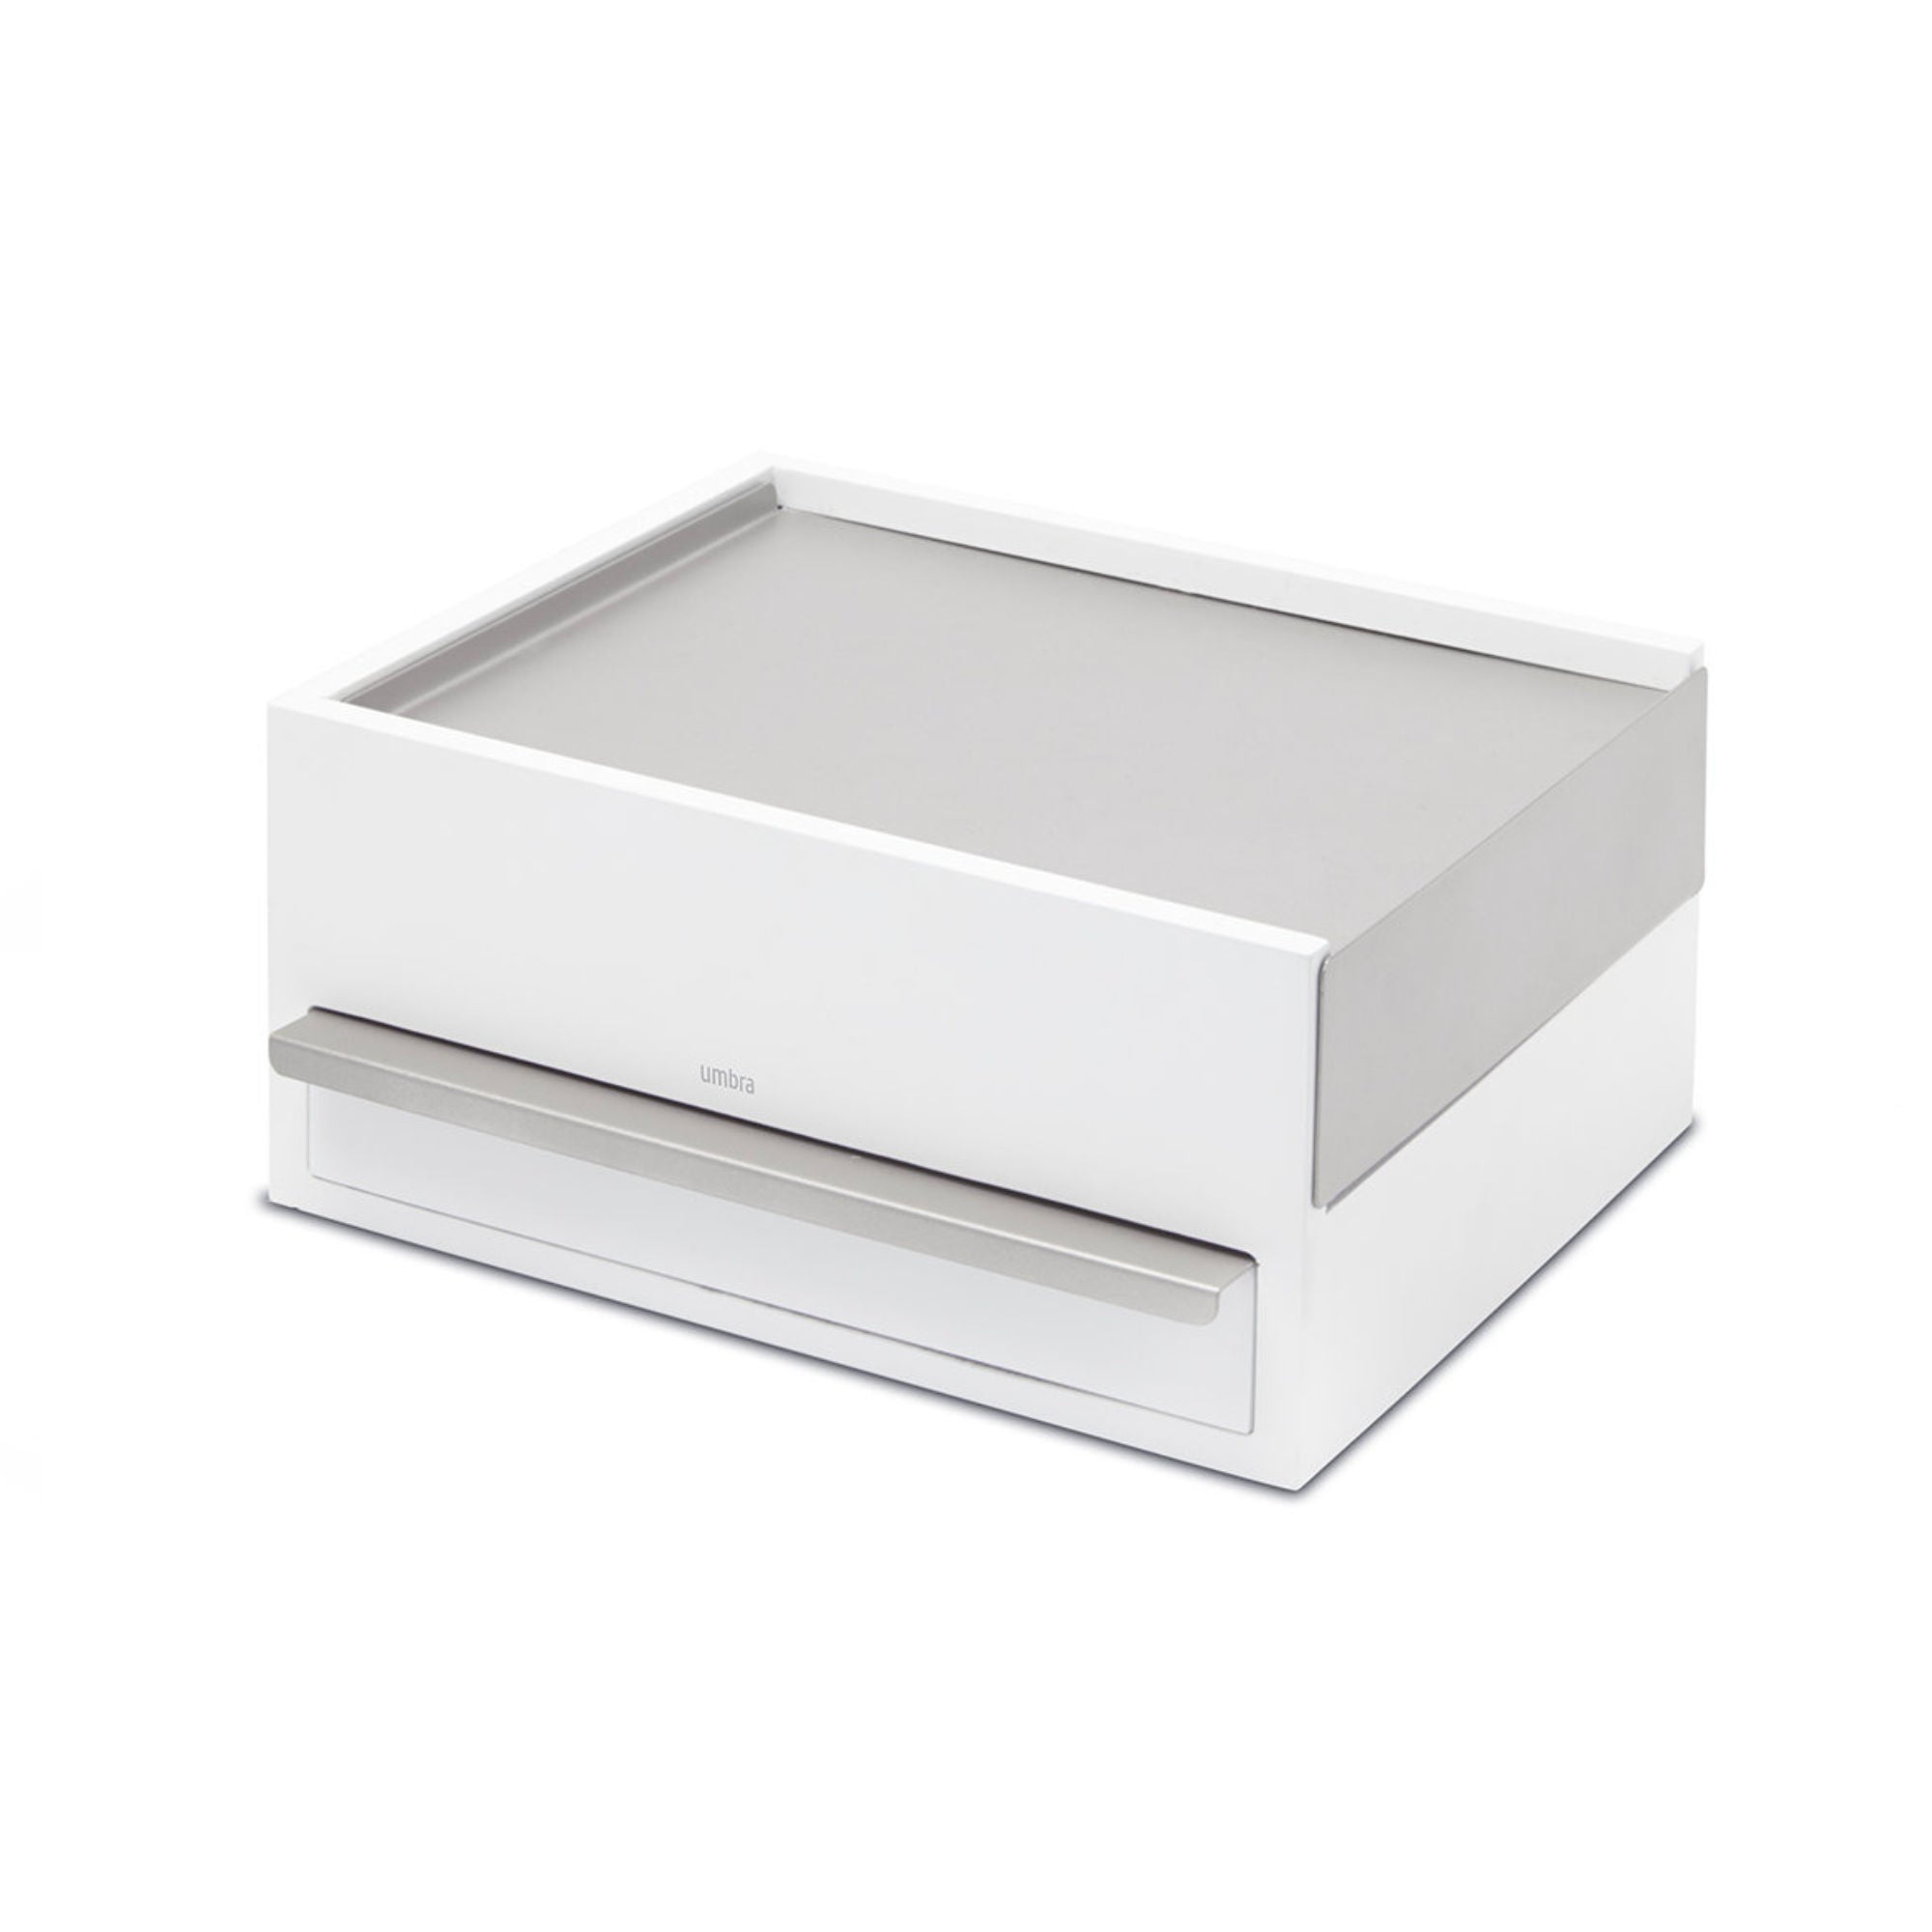 Umbra Stowit jewelry box white, large